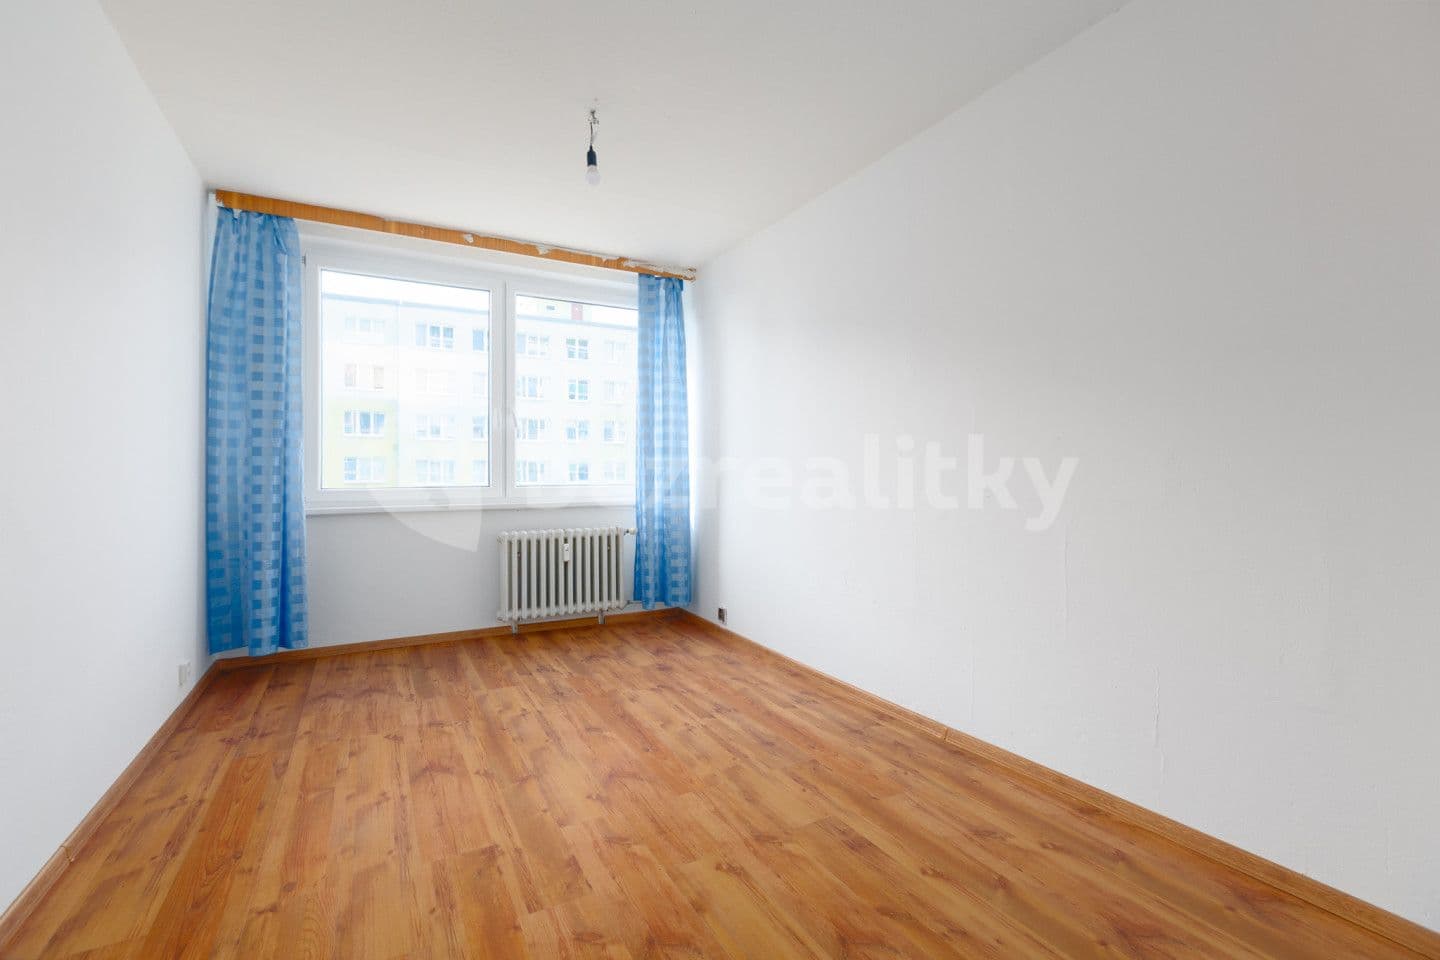 4 bedroom flat for sale, 82 m², Luční, Litvínov, Ústecký Region